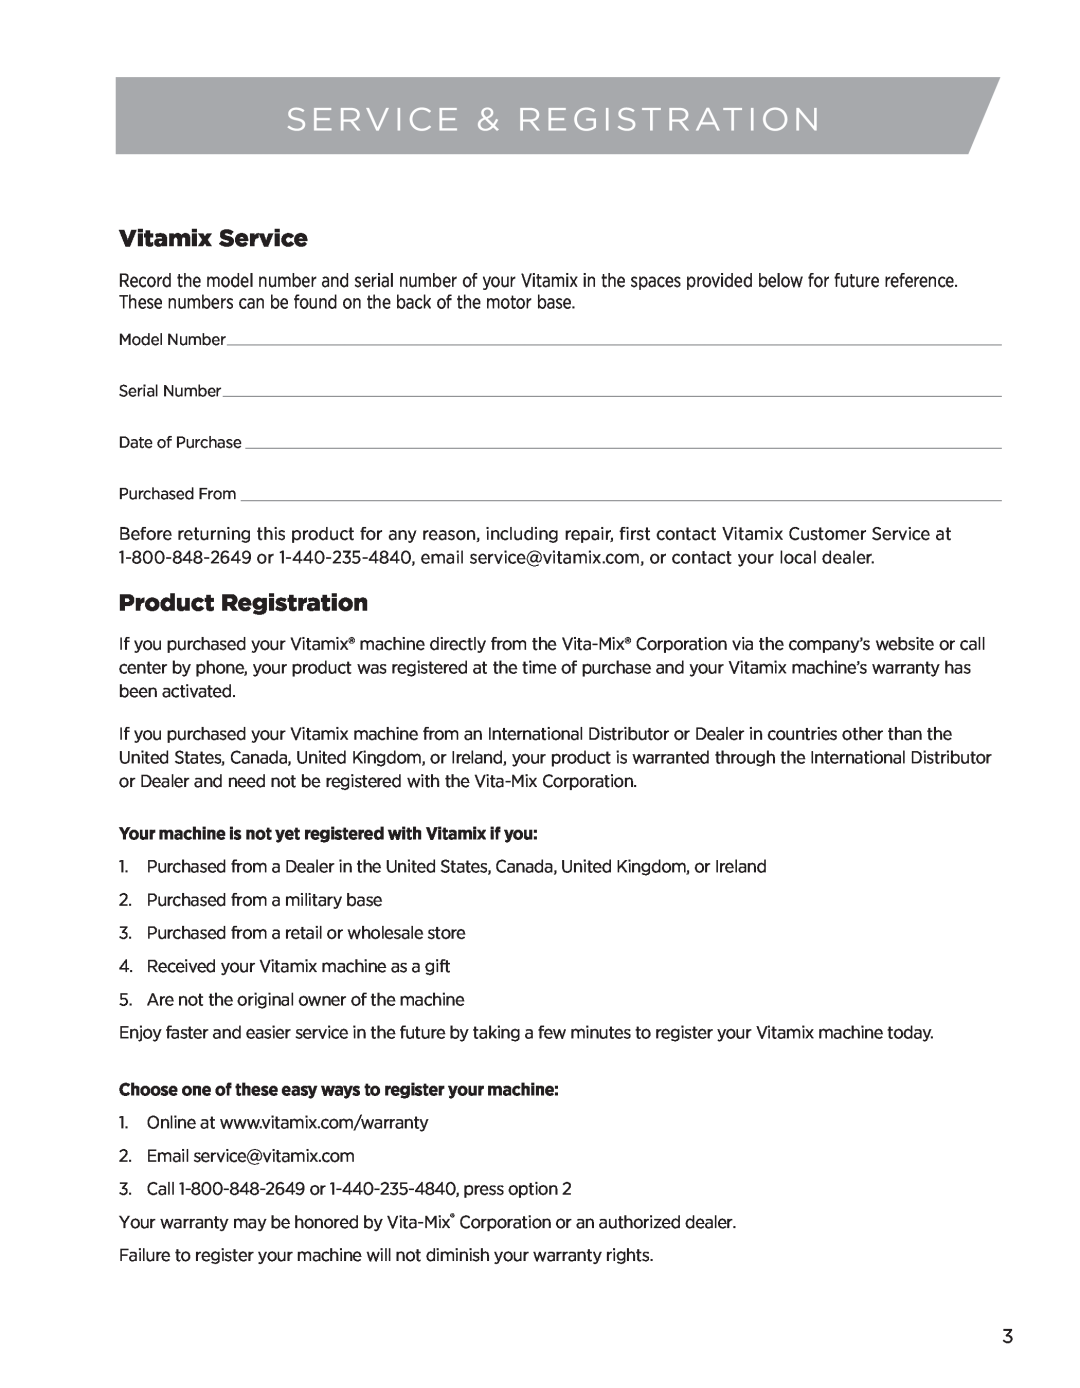 Vita-Mix 6300 owner manual Service & Registration, Vitamix Service, Product Registration 